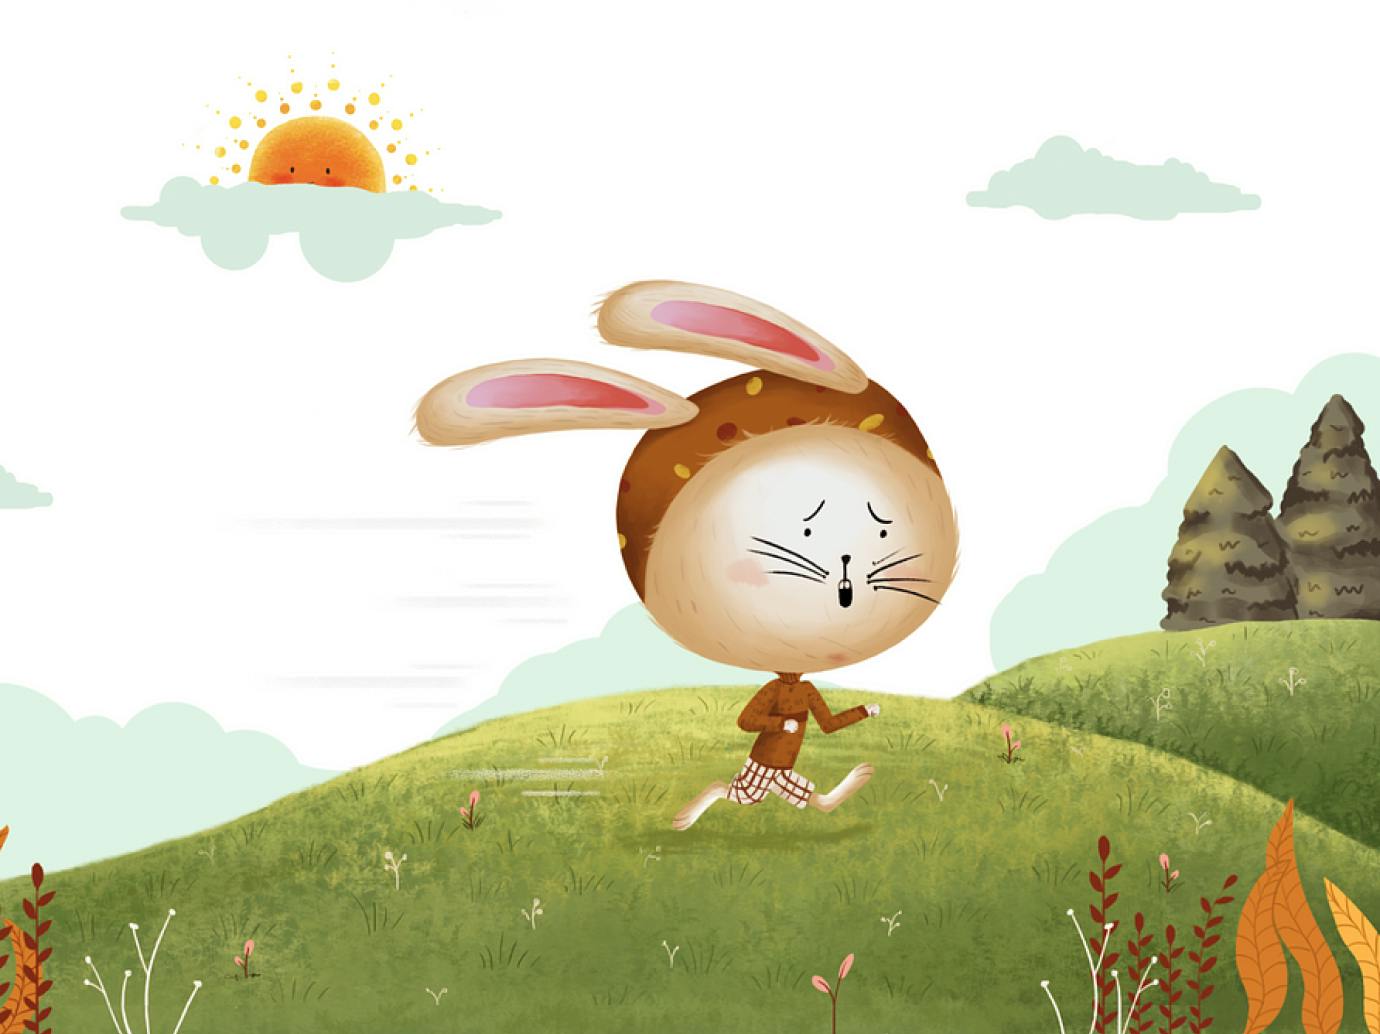 bunny Illustration for kids book